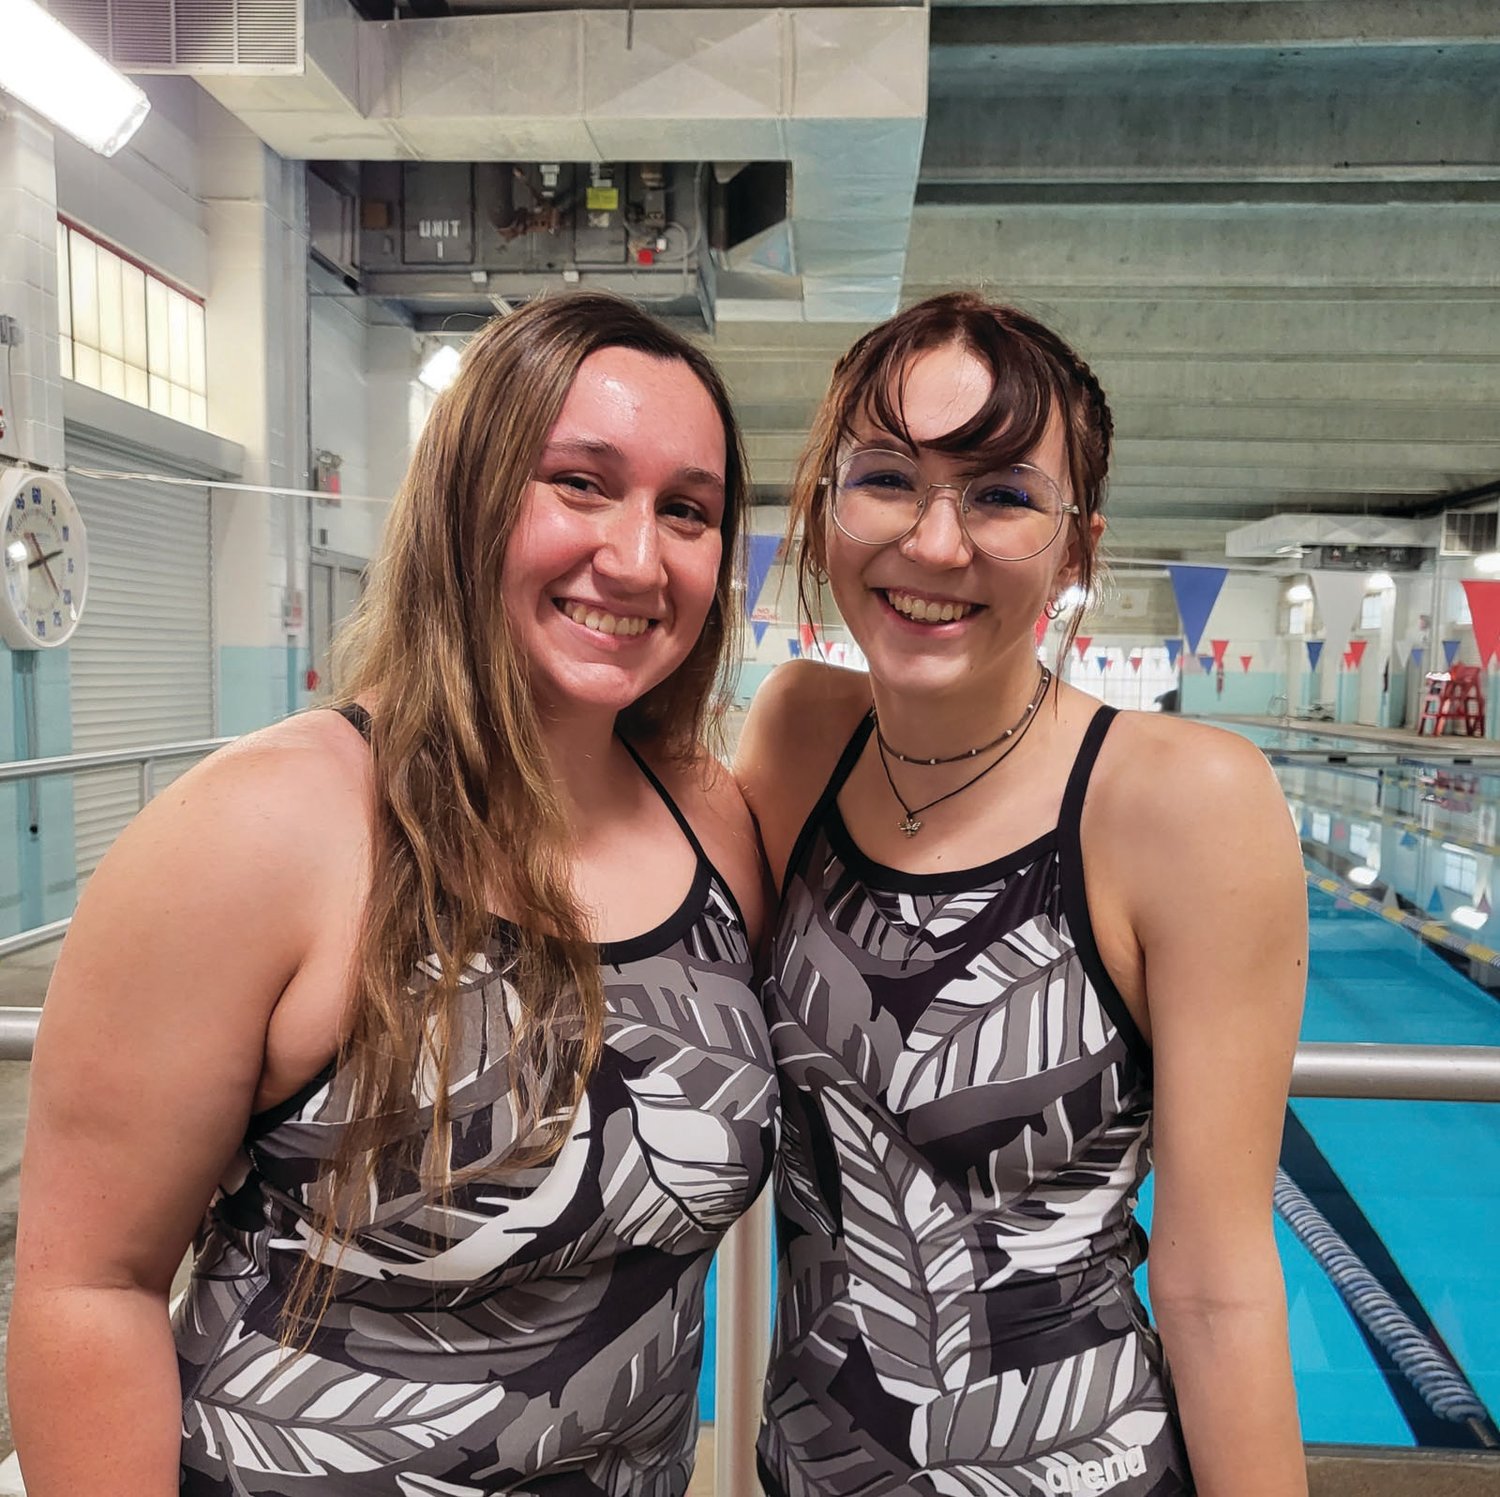 Pilgrim girls
swim seniors Kaylee
Collins (left) and Kara Lee
take a photo together during
the team’s recent Senior
Night meet.